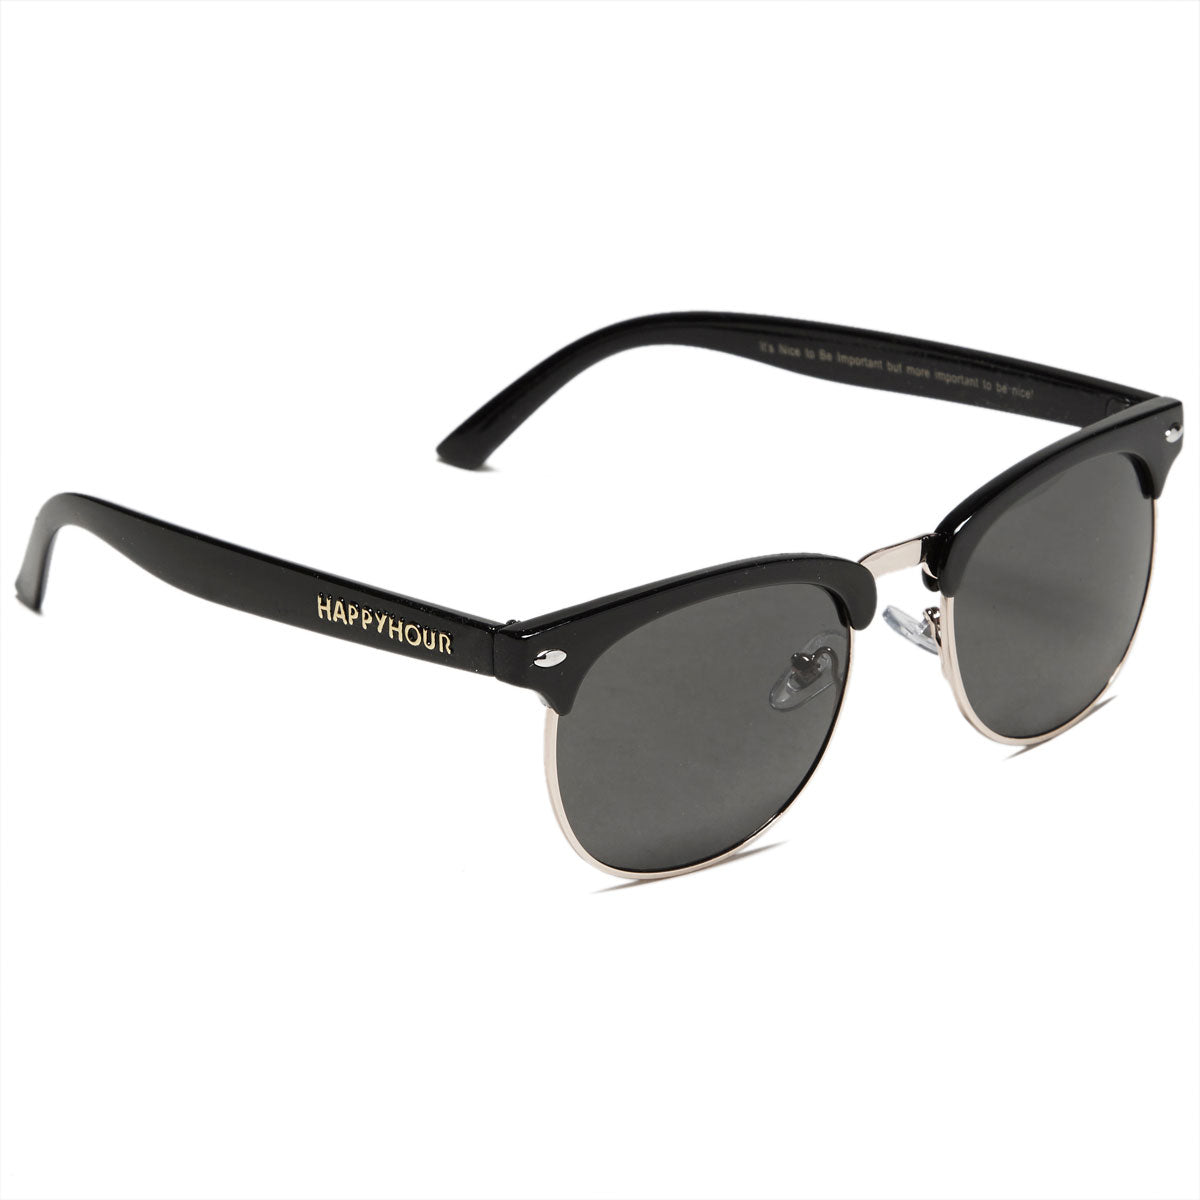 Happy Hour G2 Sunglasses - Black Gloss/Black Lens image 1